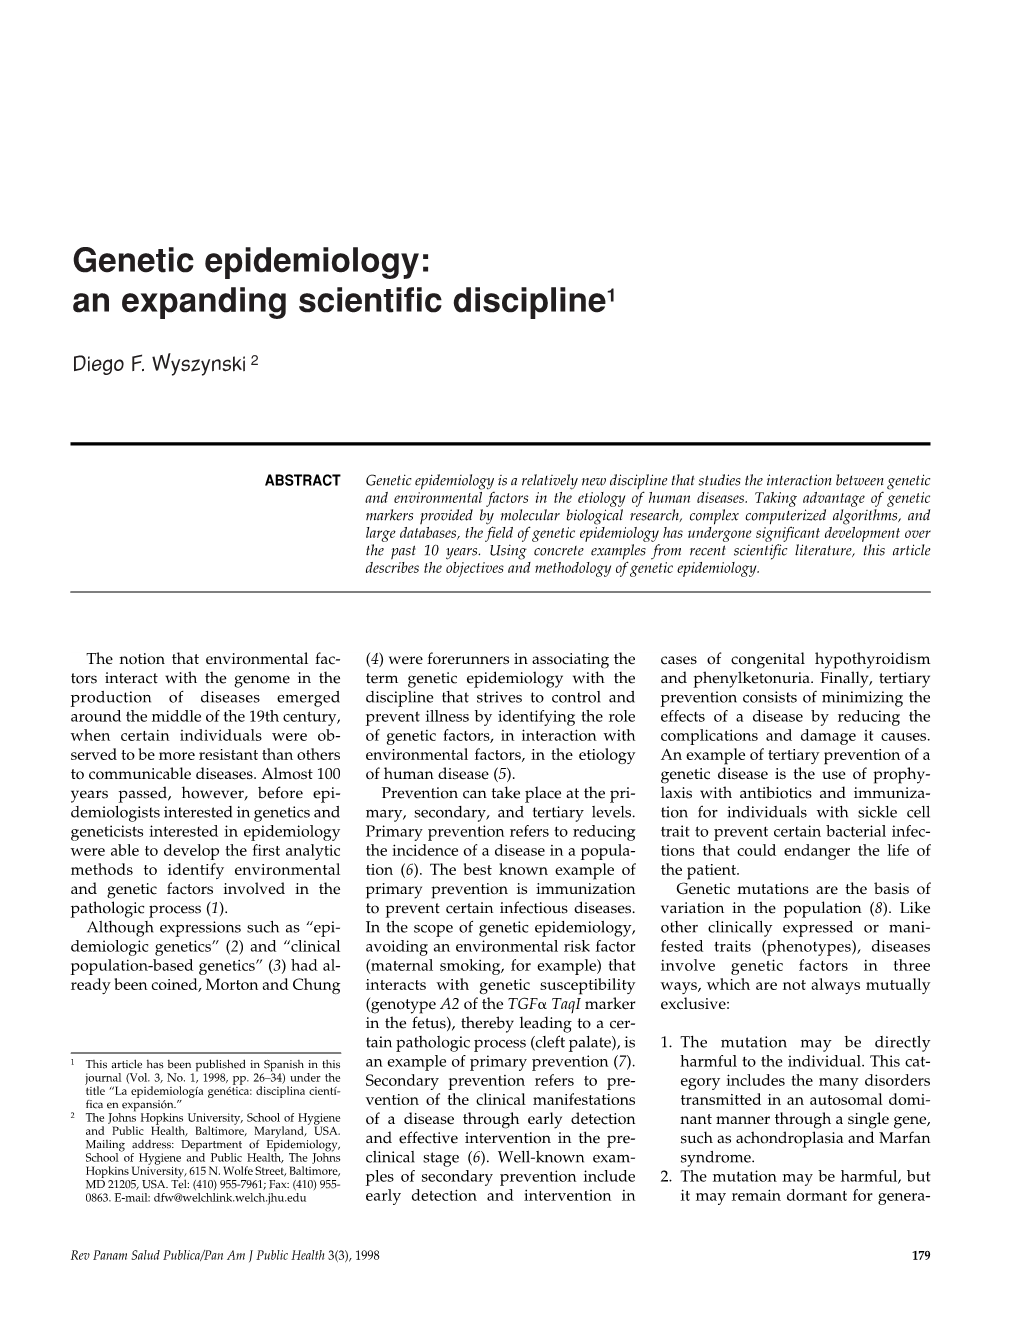 Genetic Epidemiology: an Expanding Scientific Discipline1